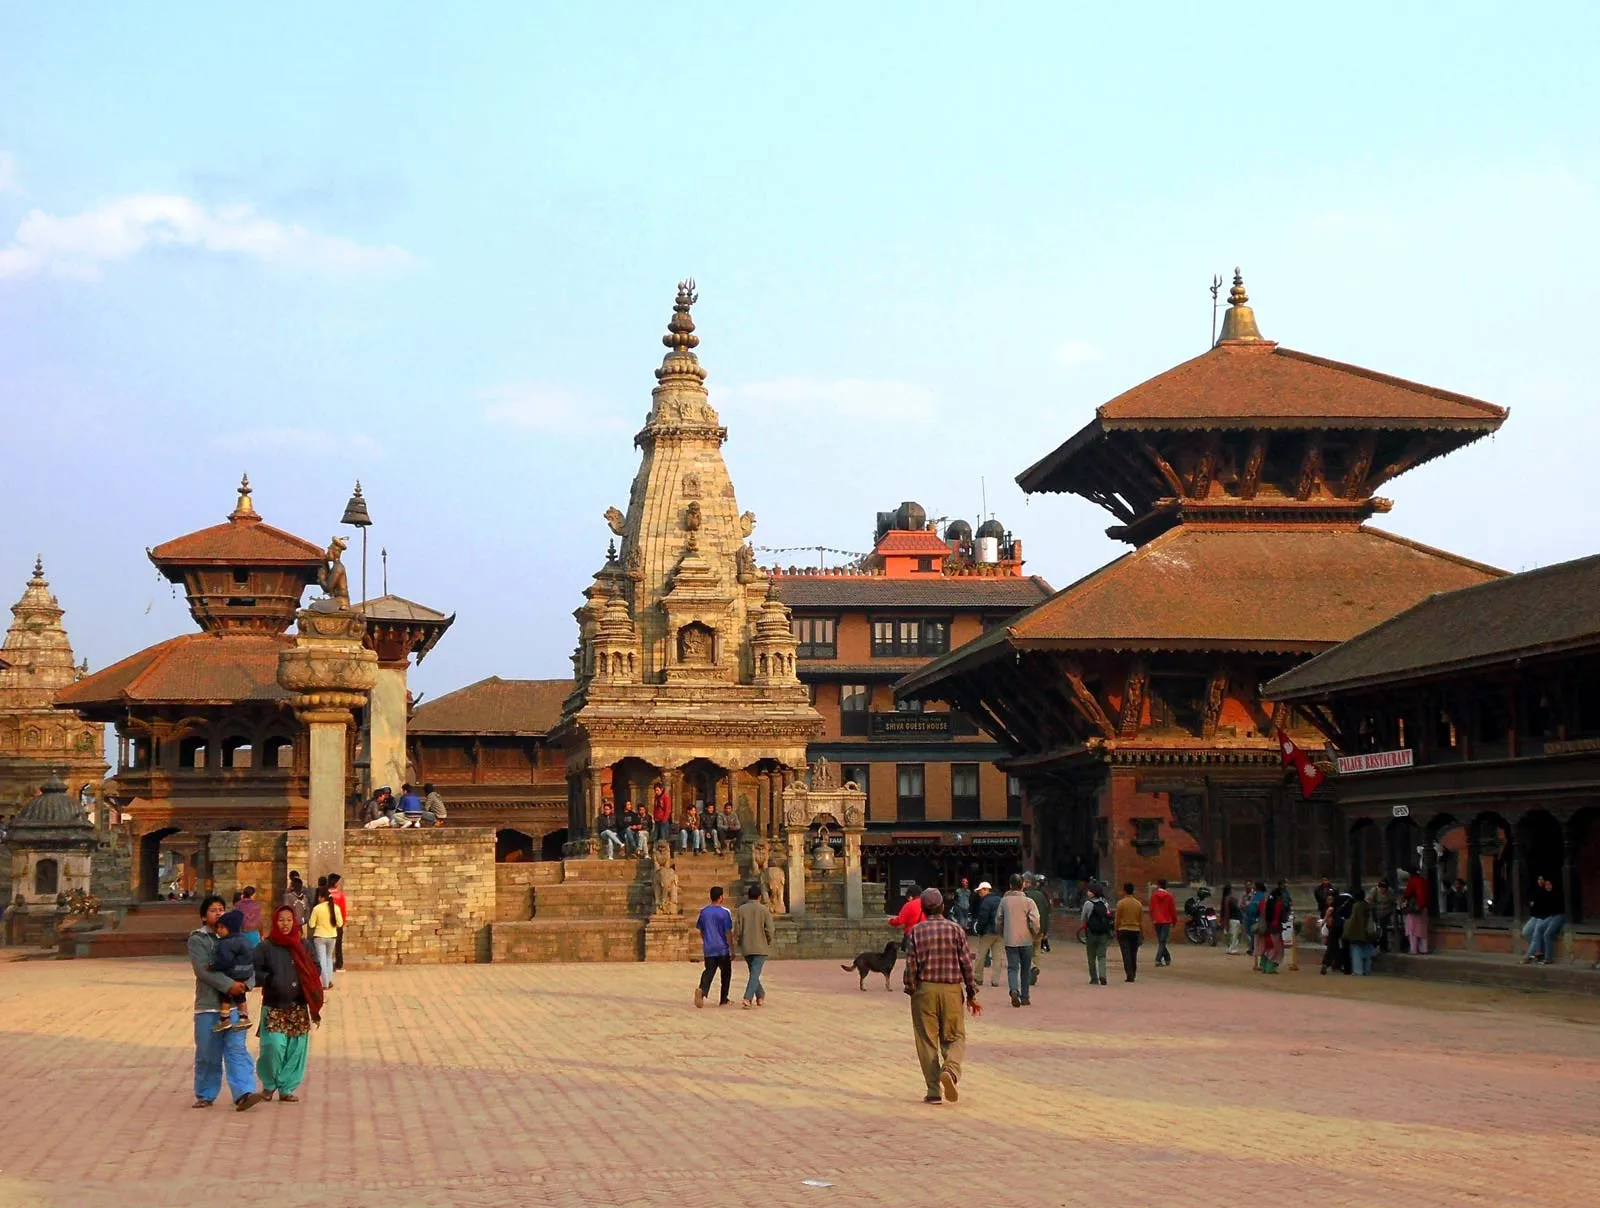 Phaplu to Kathmandu by flight / 40min spectacular Hialayan flight / Overnight at Hotel in Kathmandu'